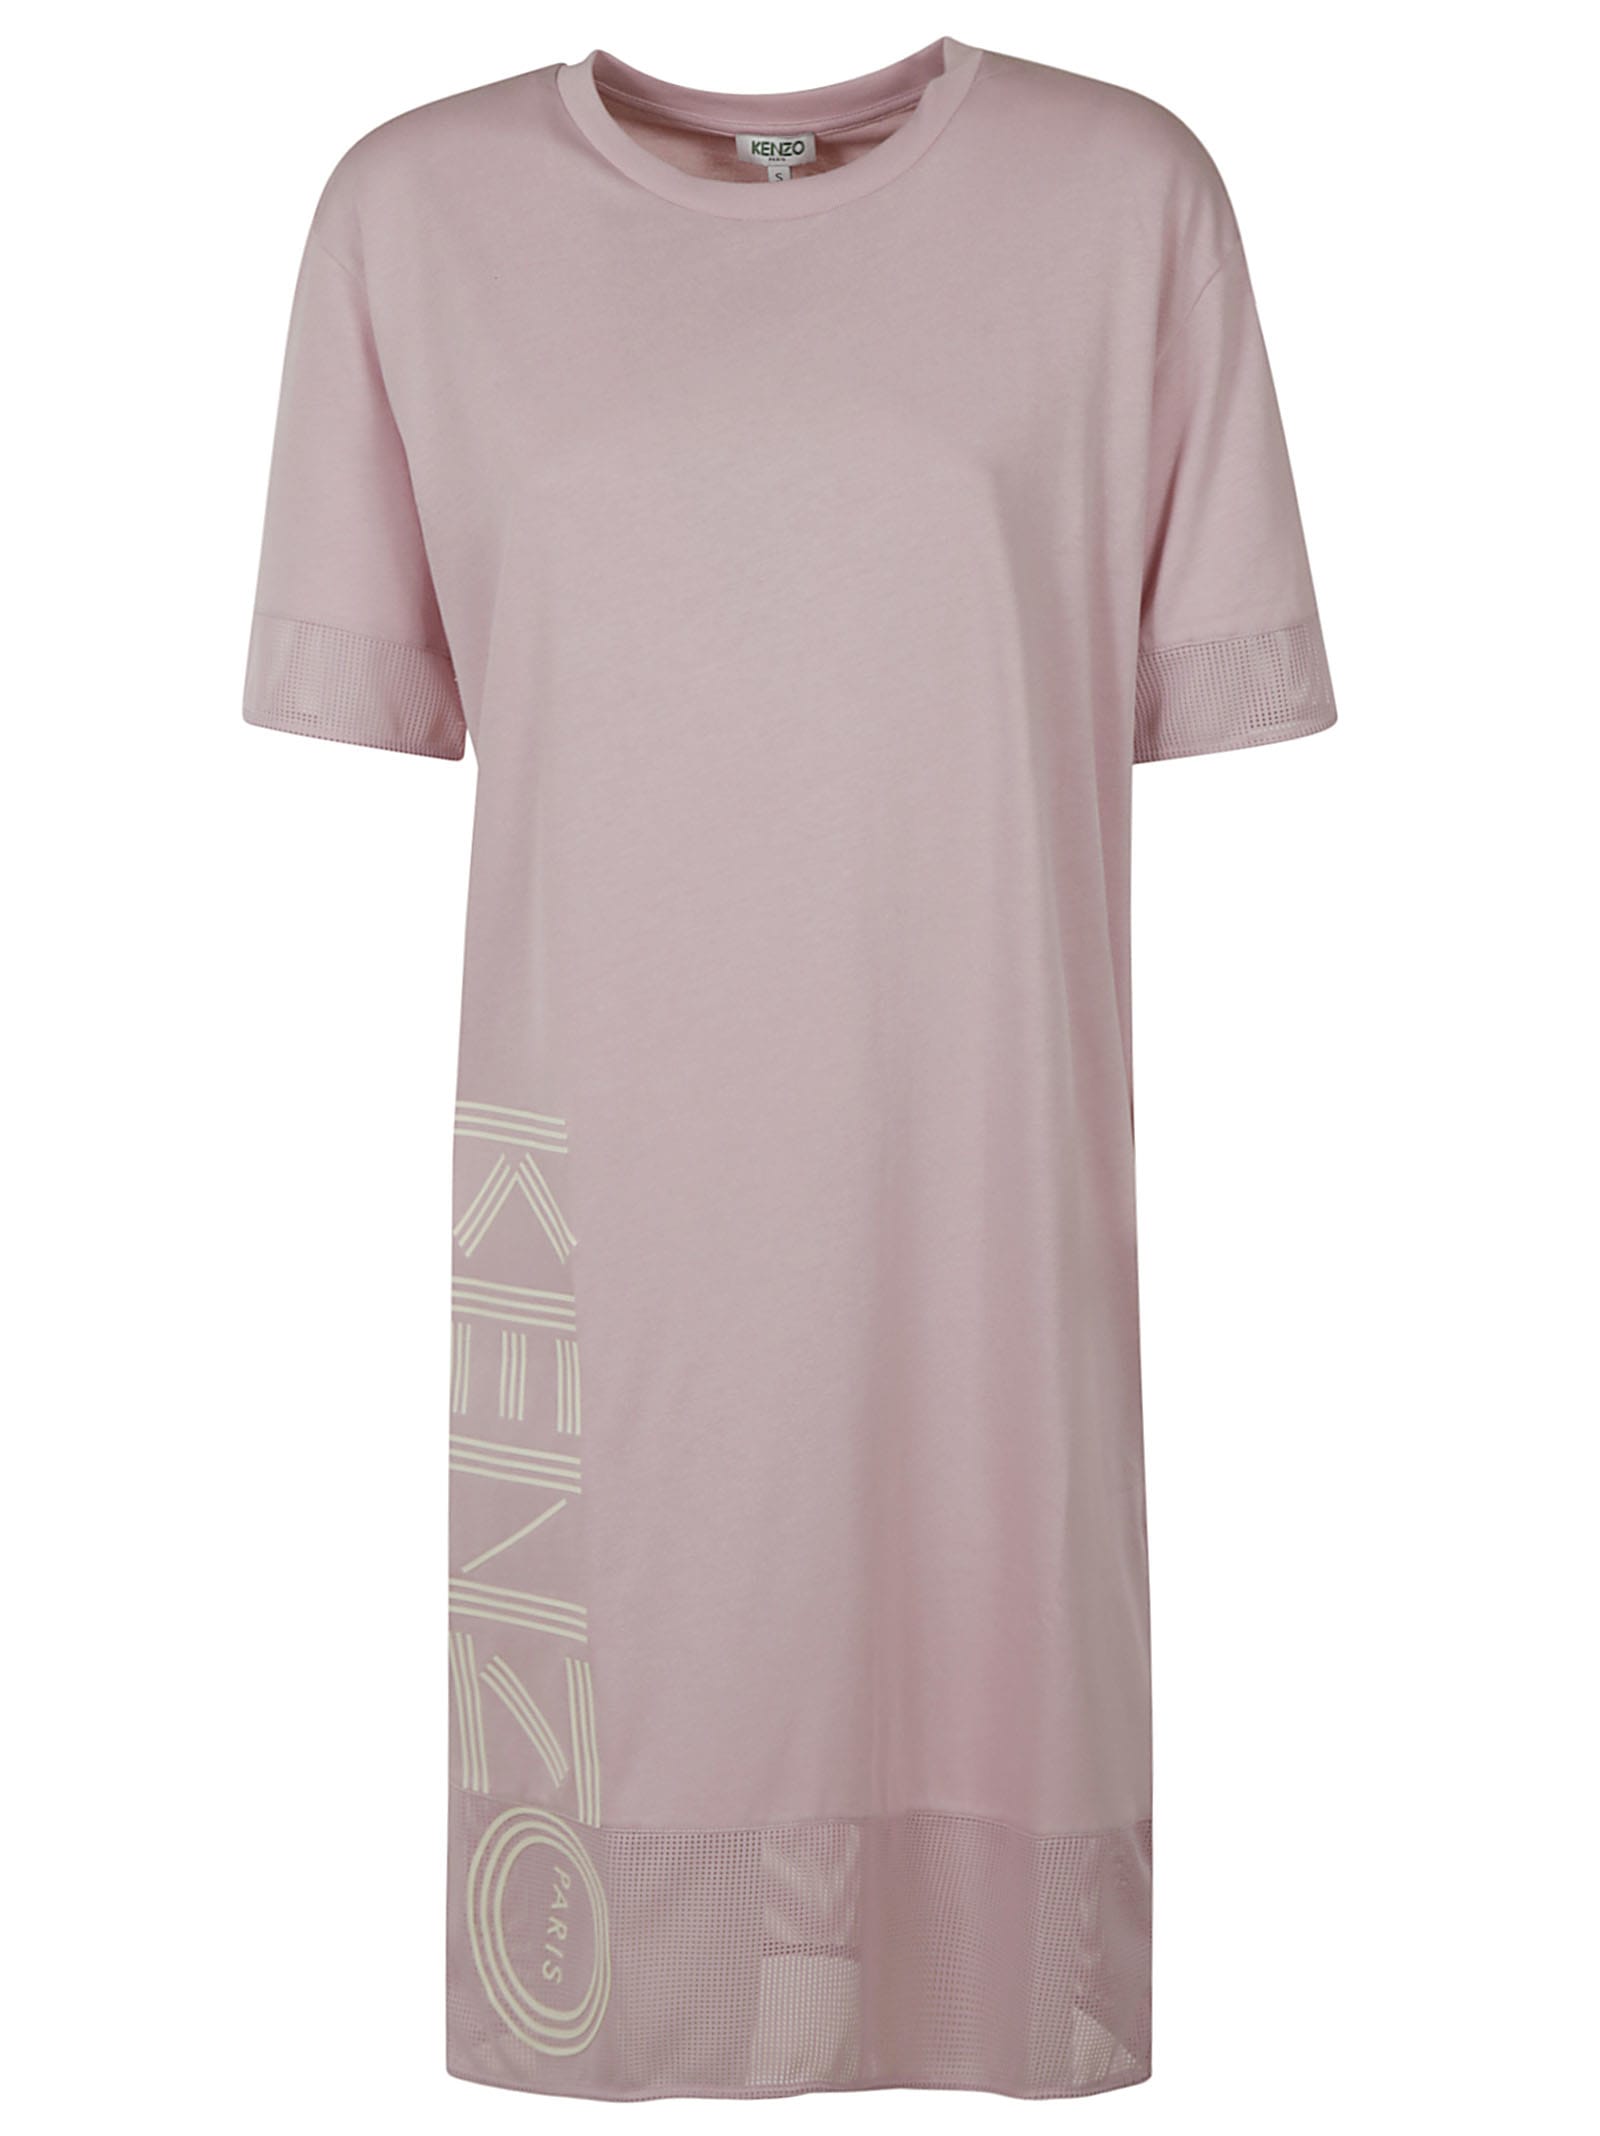 Kenzo Sport T-shirt Dress